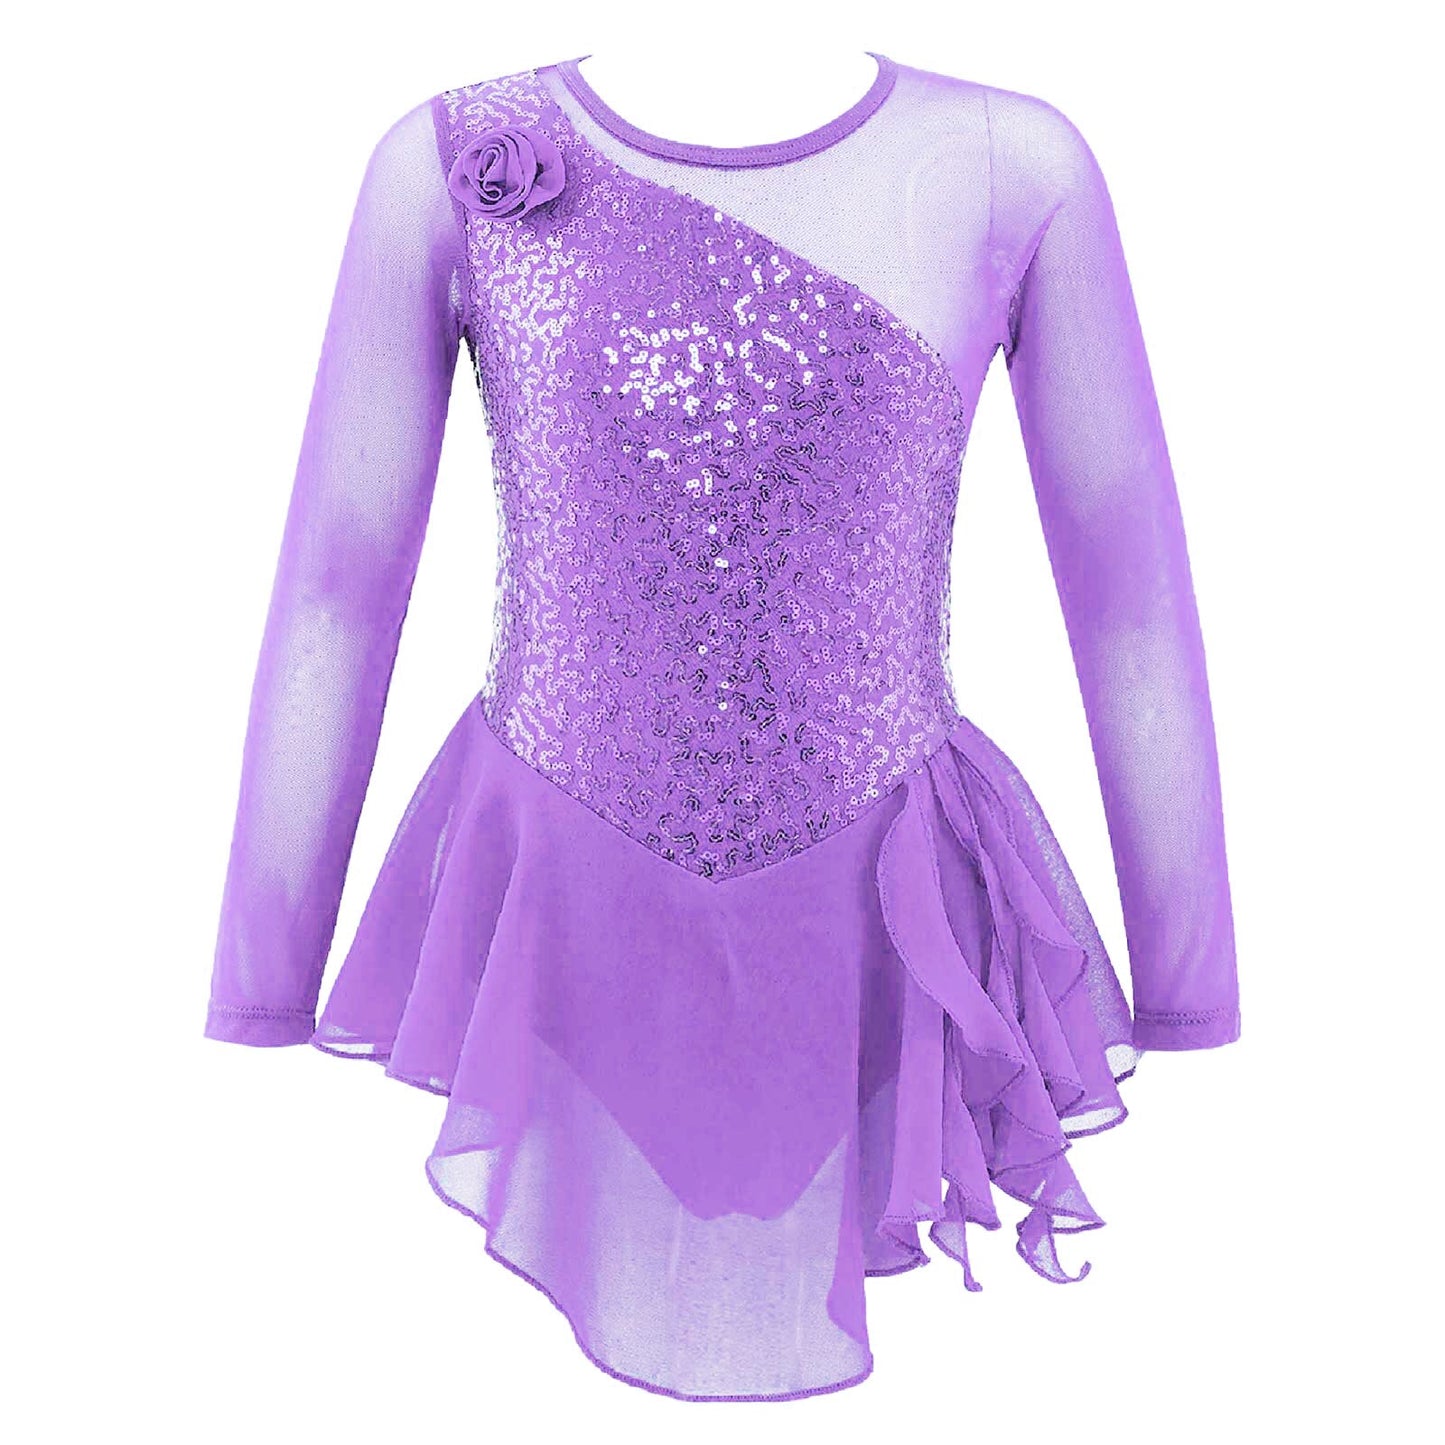 Gymnastic leotard  Skating dresses, Ice skating dresses, Figure